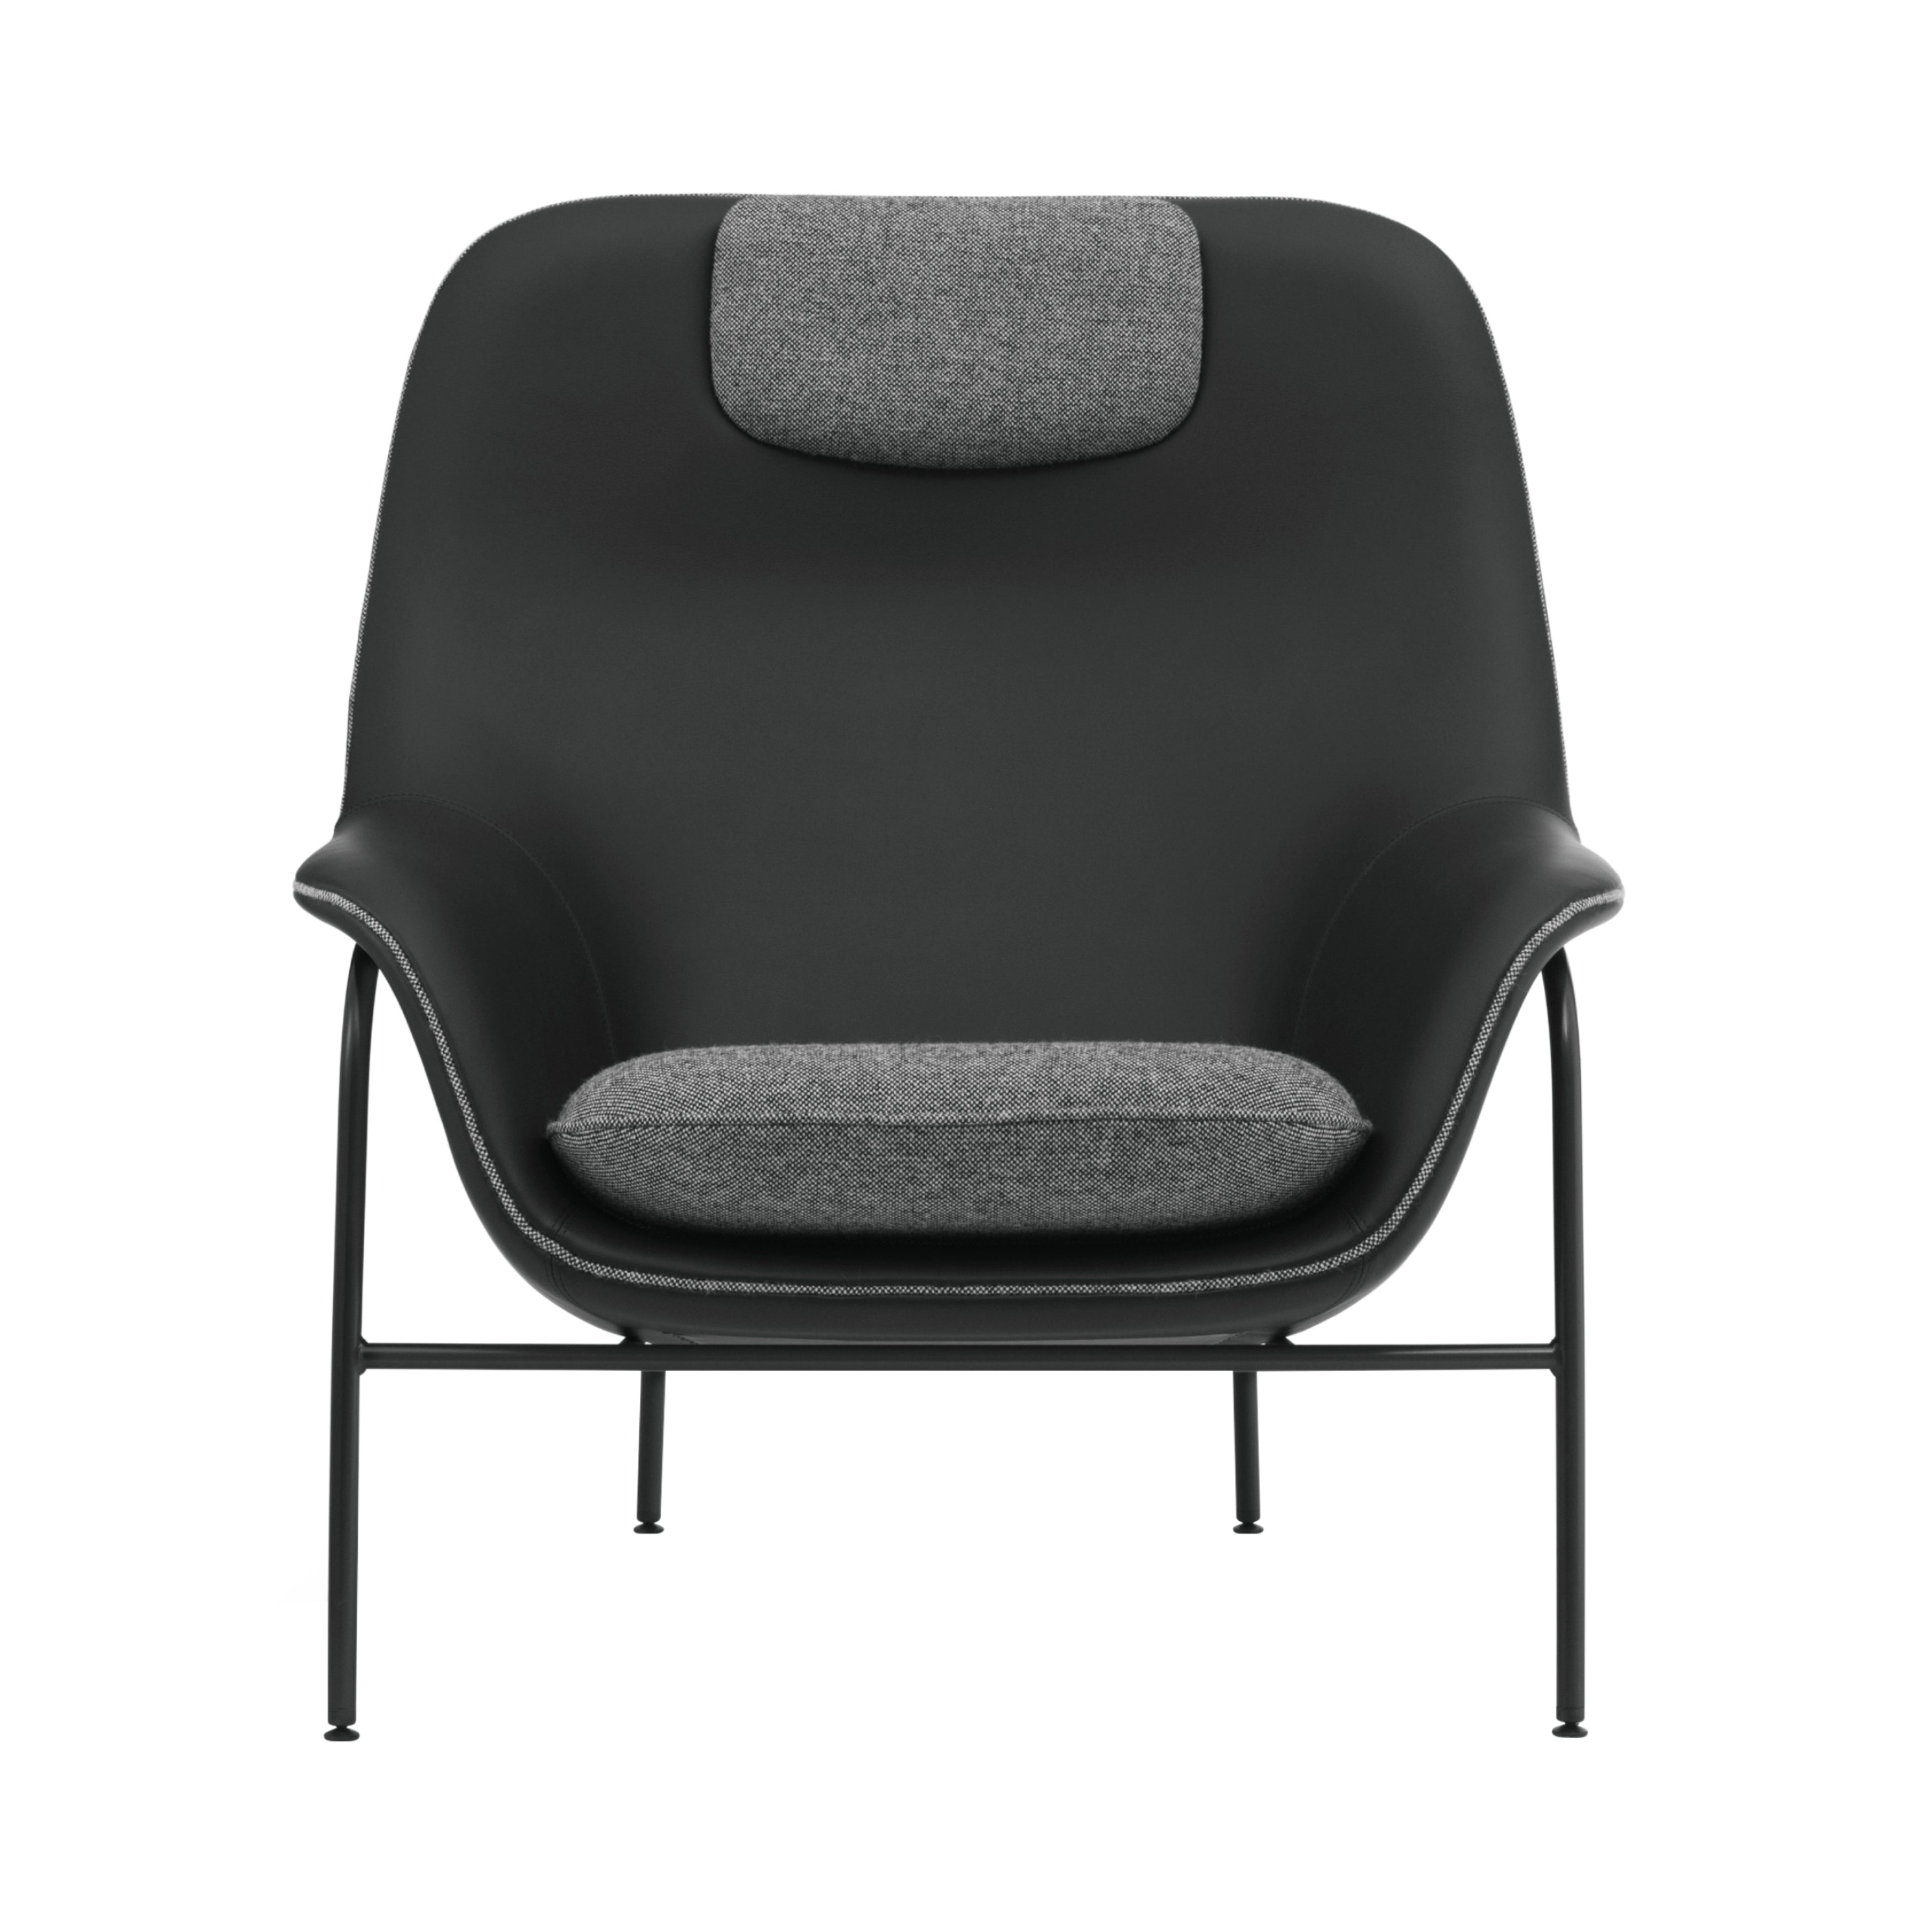 Drape Lounge Chair: High + Steel Base + With Headrest + Black